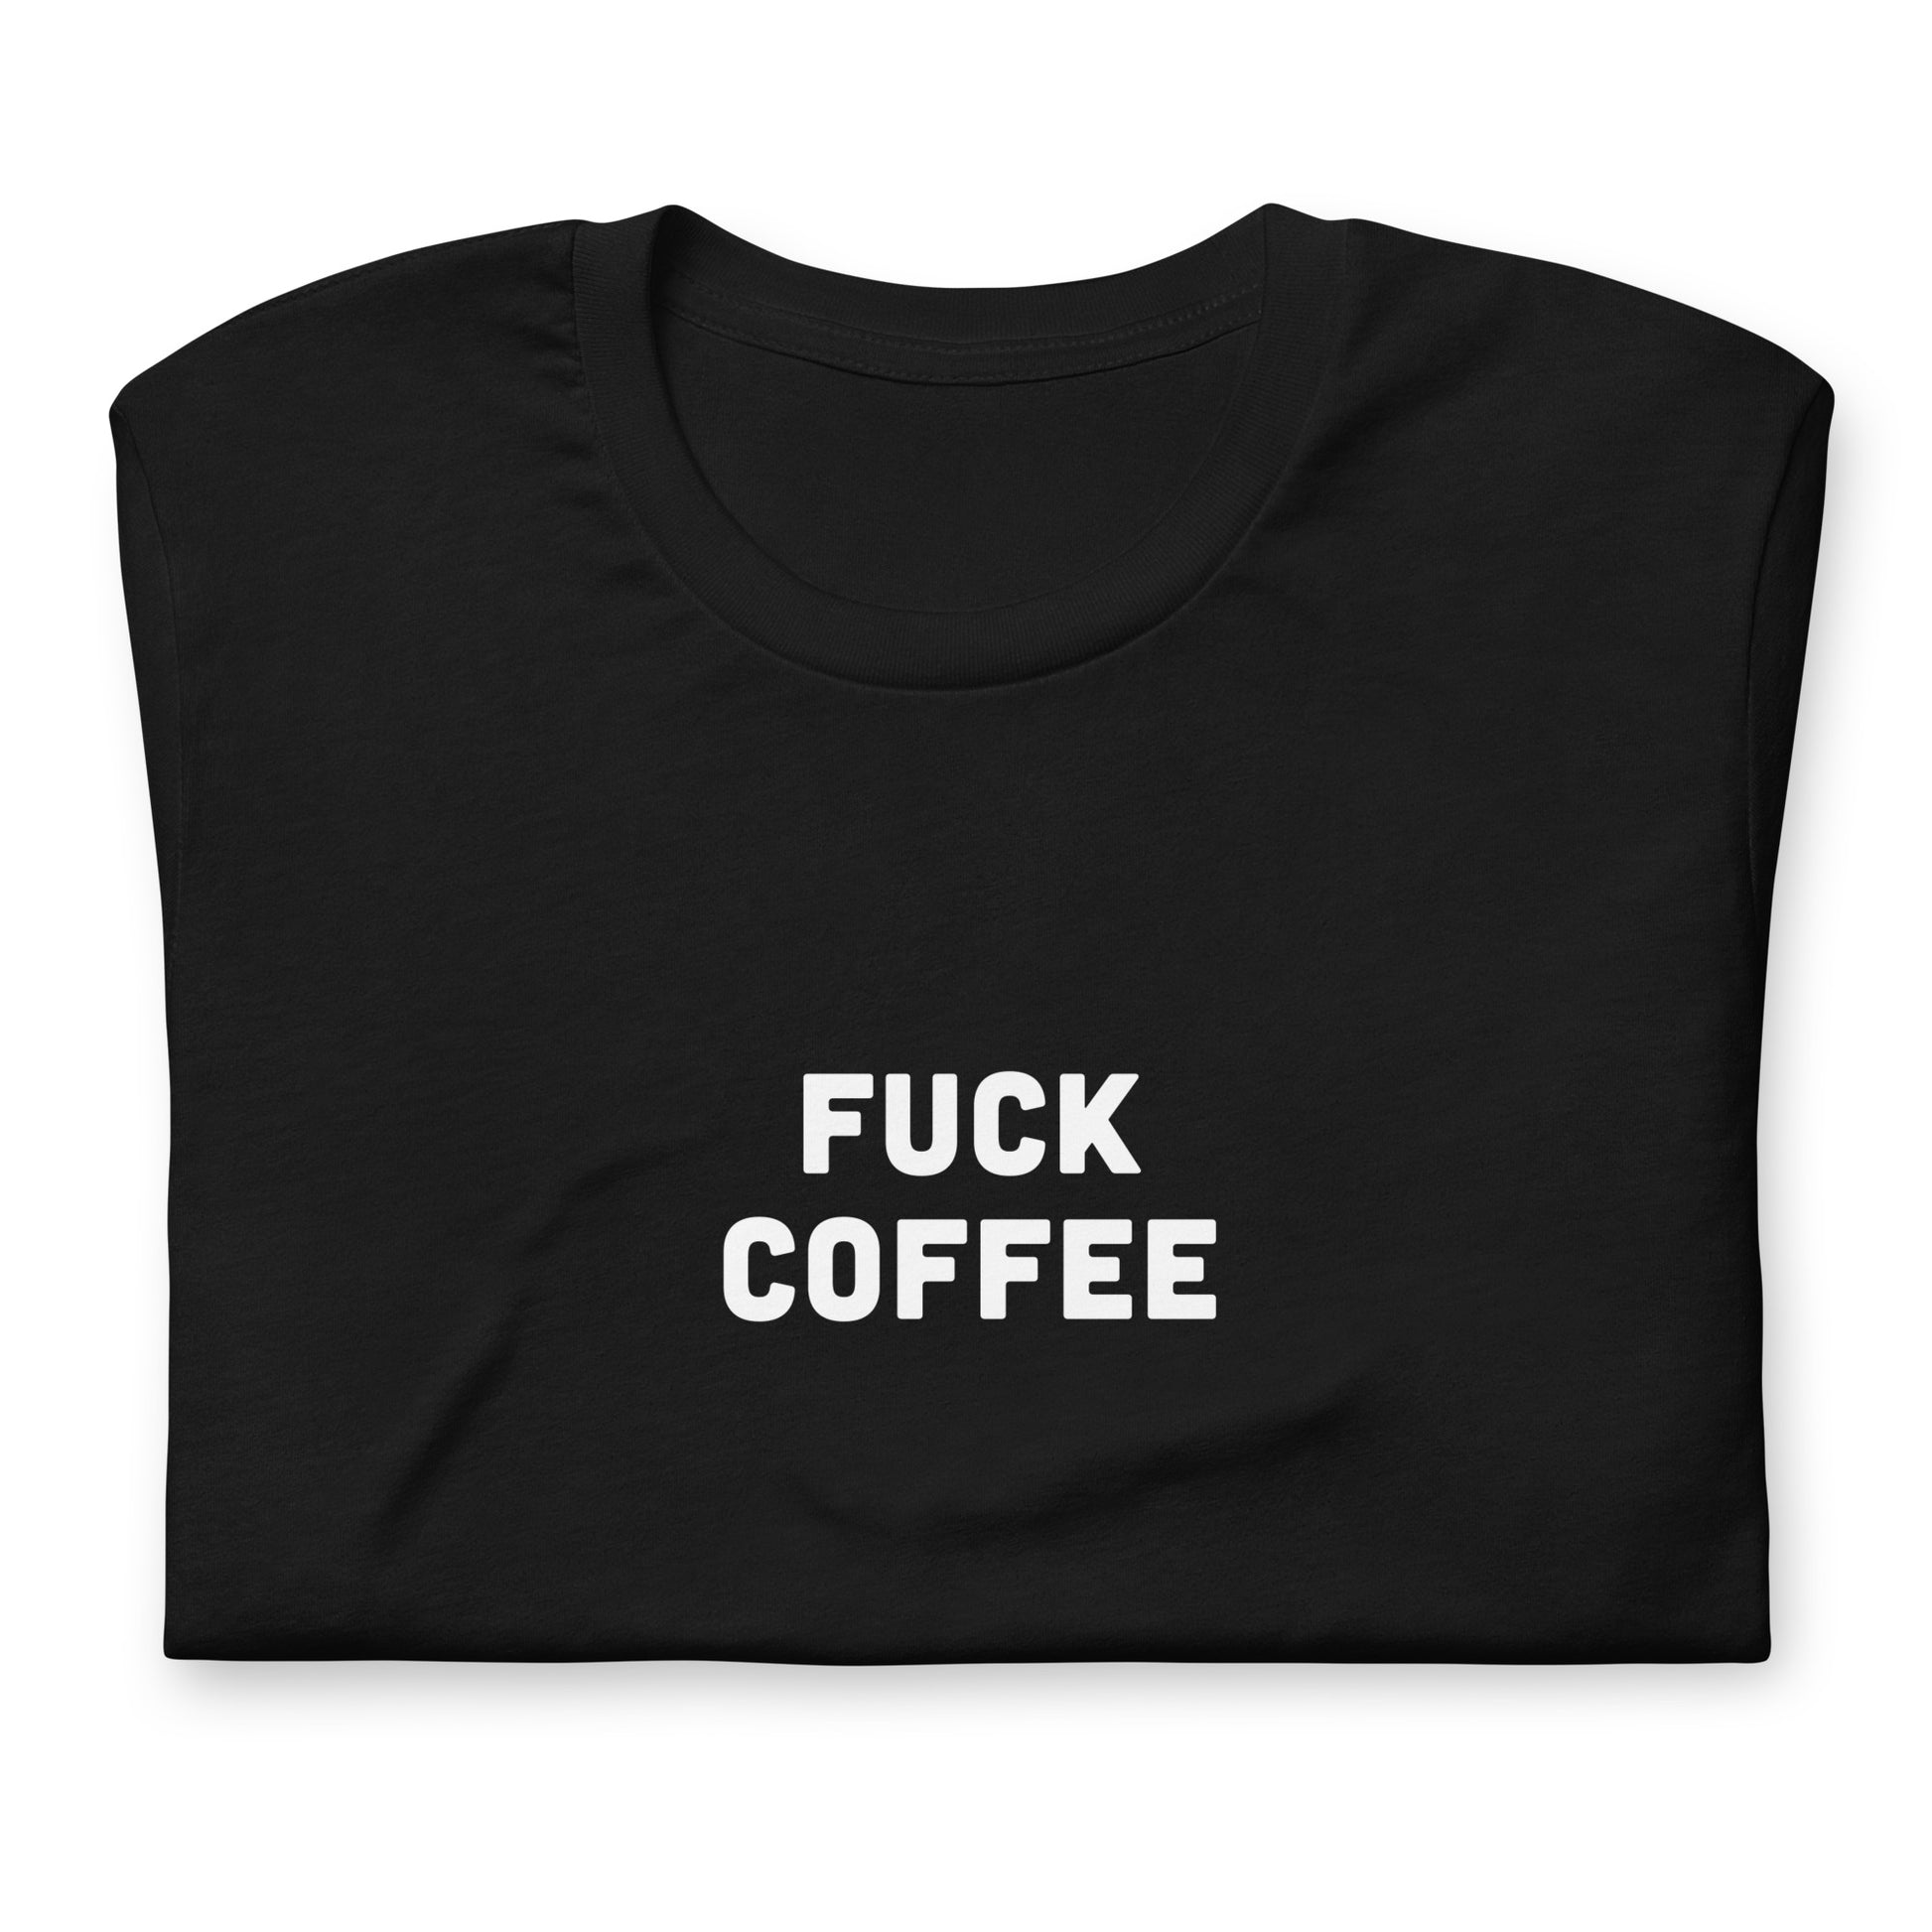 Fuck Coffee T-Shirt Size M Color Black